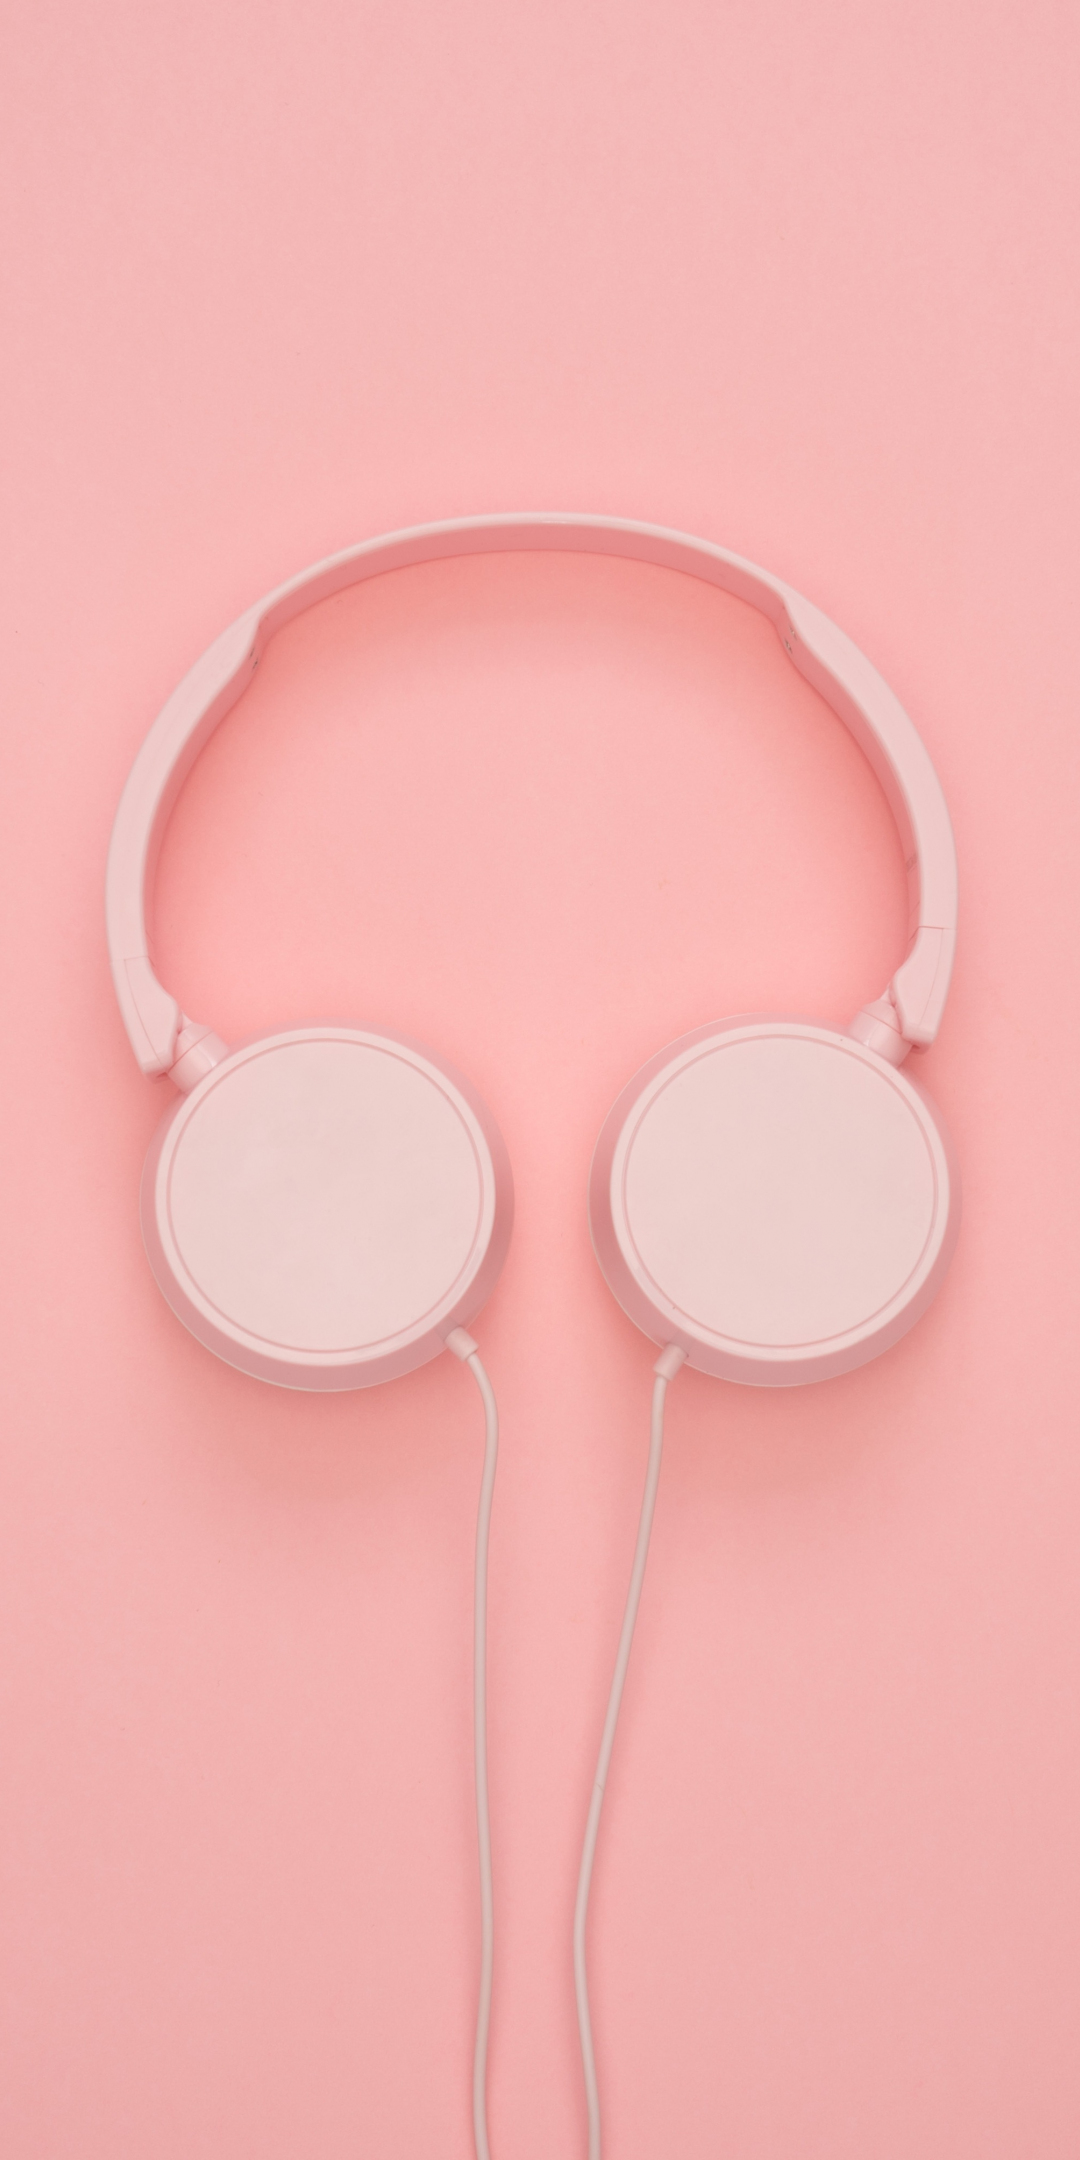 Headphone, pink, minimal, 1080x2160 wallpaper